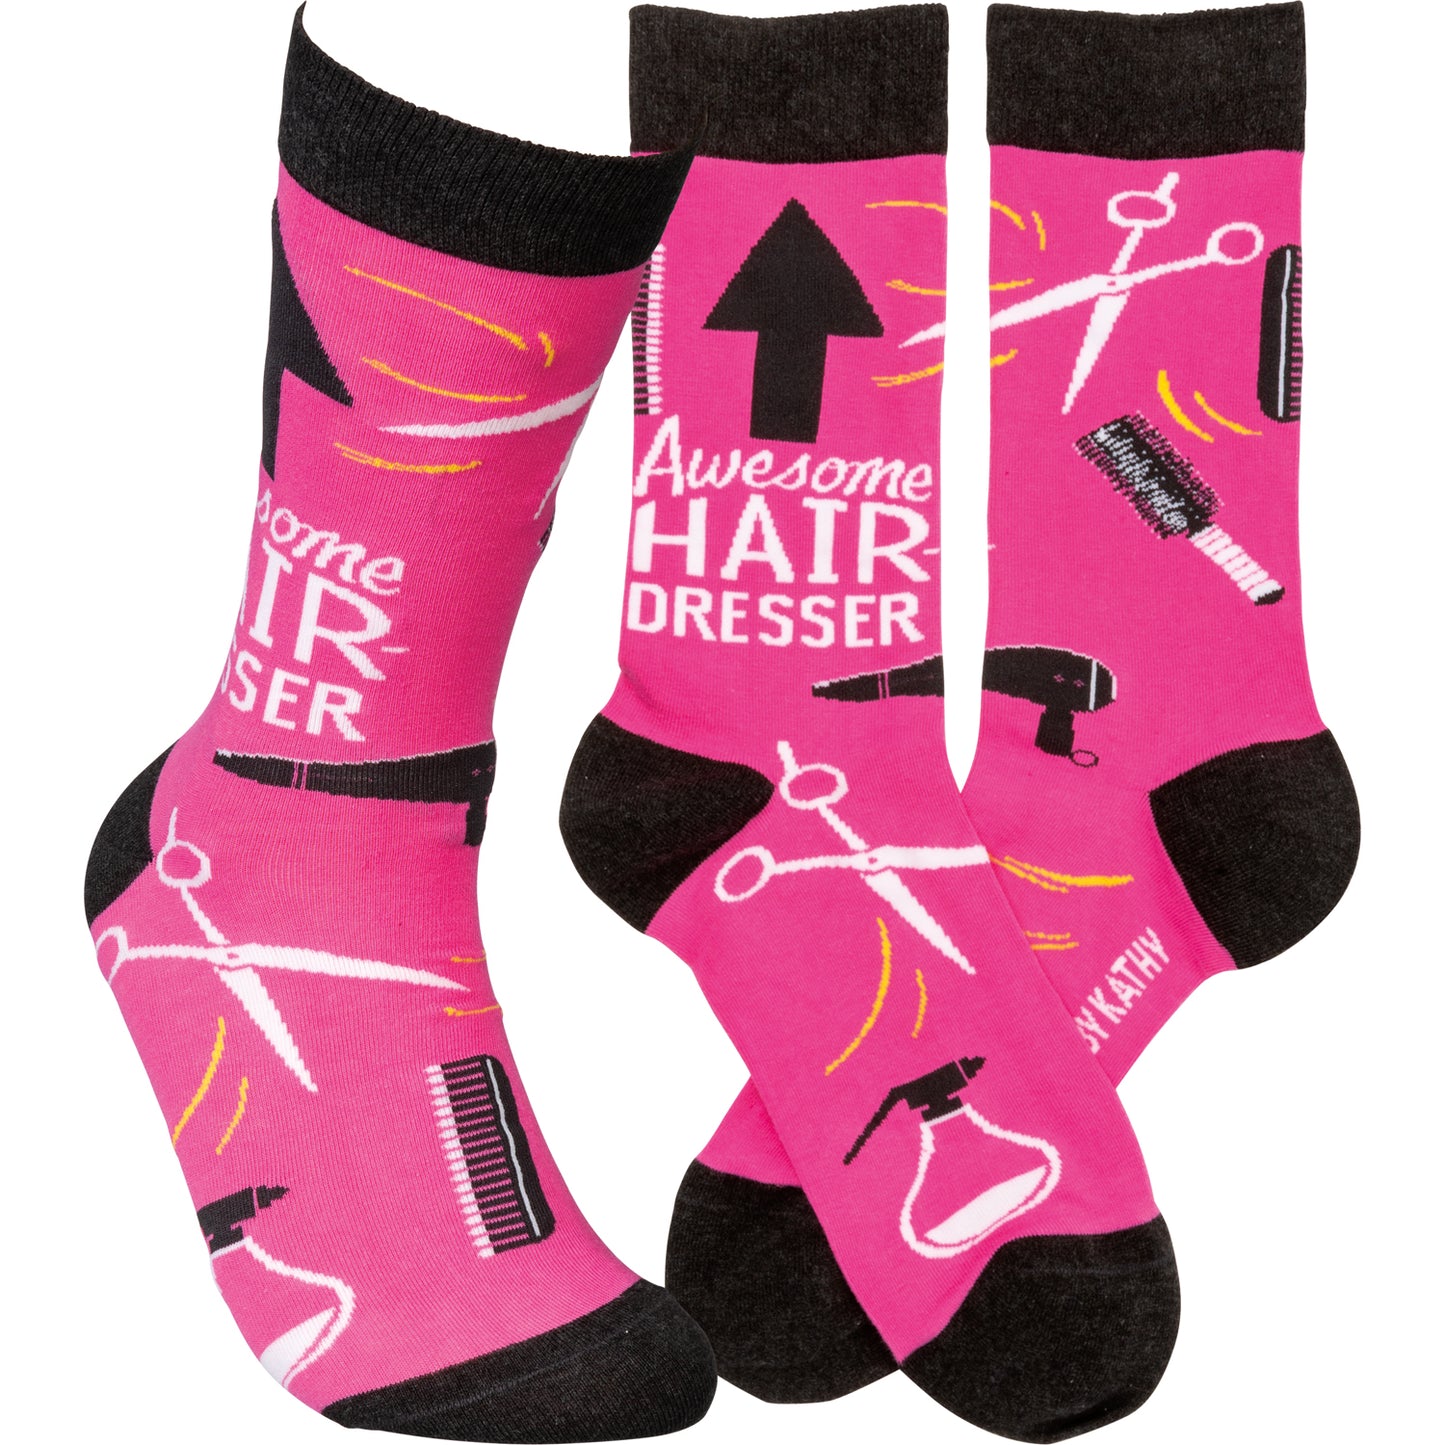 Socks Awesome Hair Dresser 105948